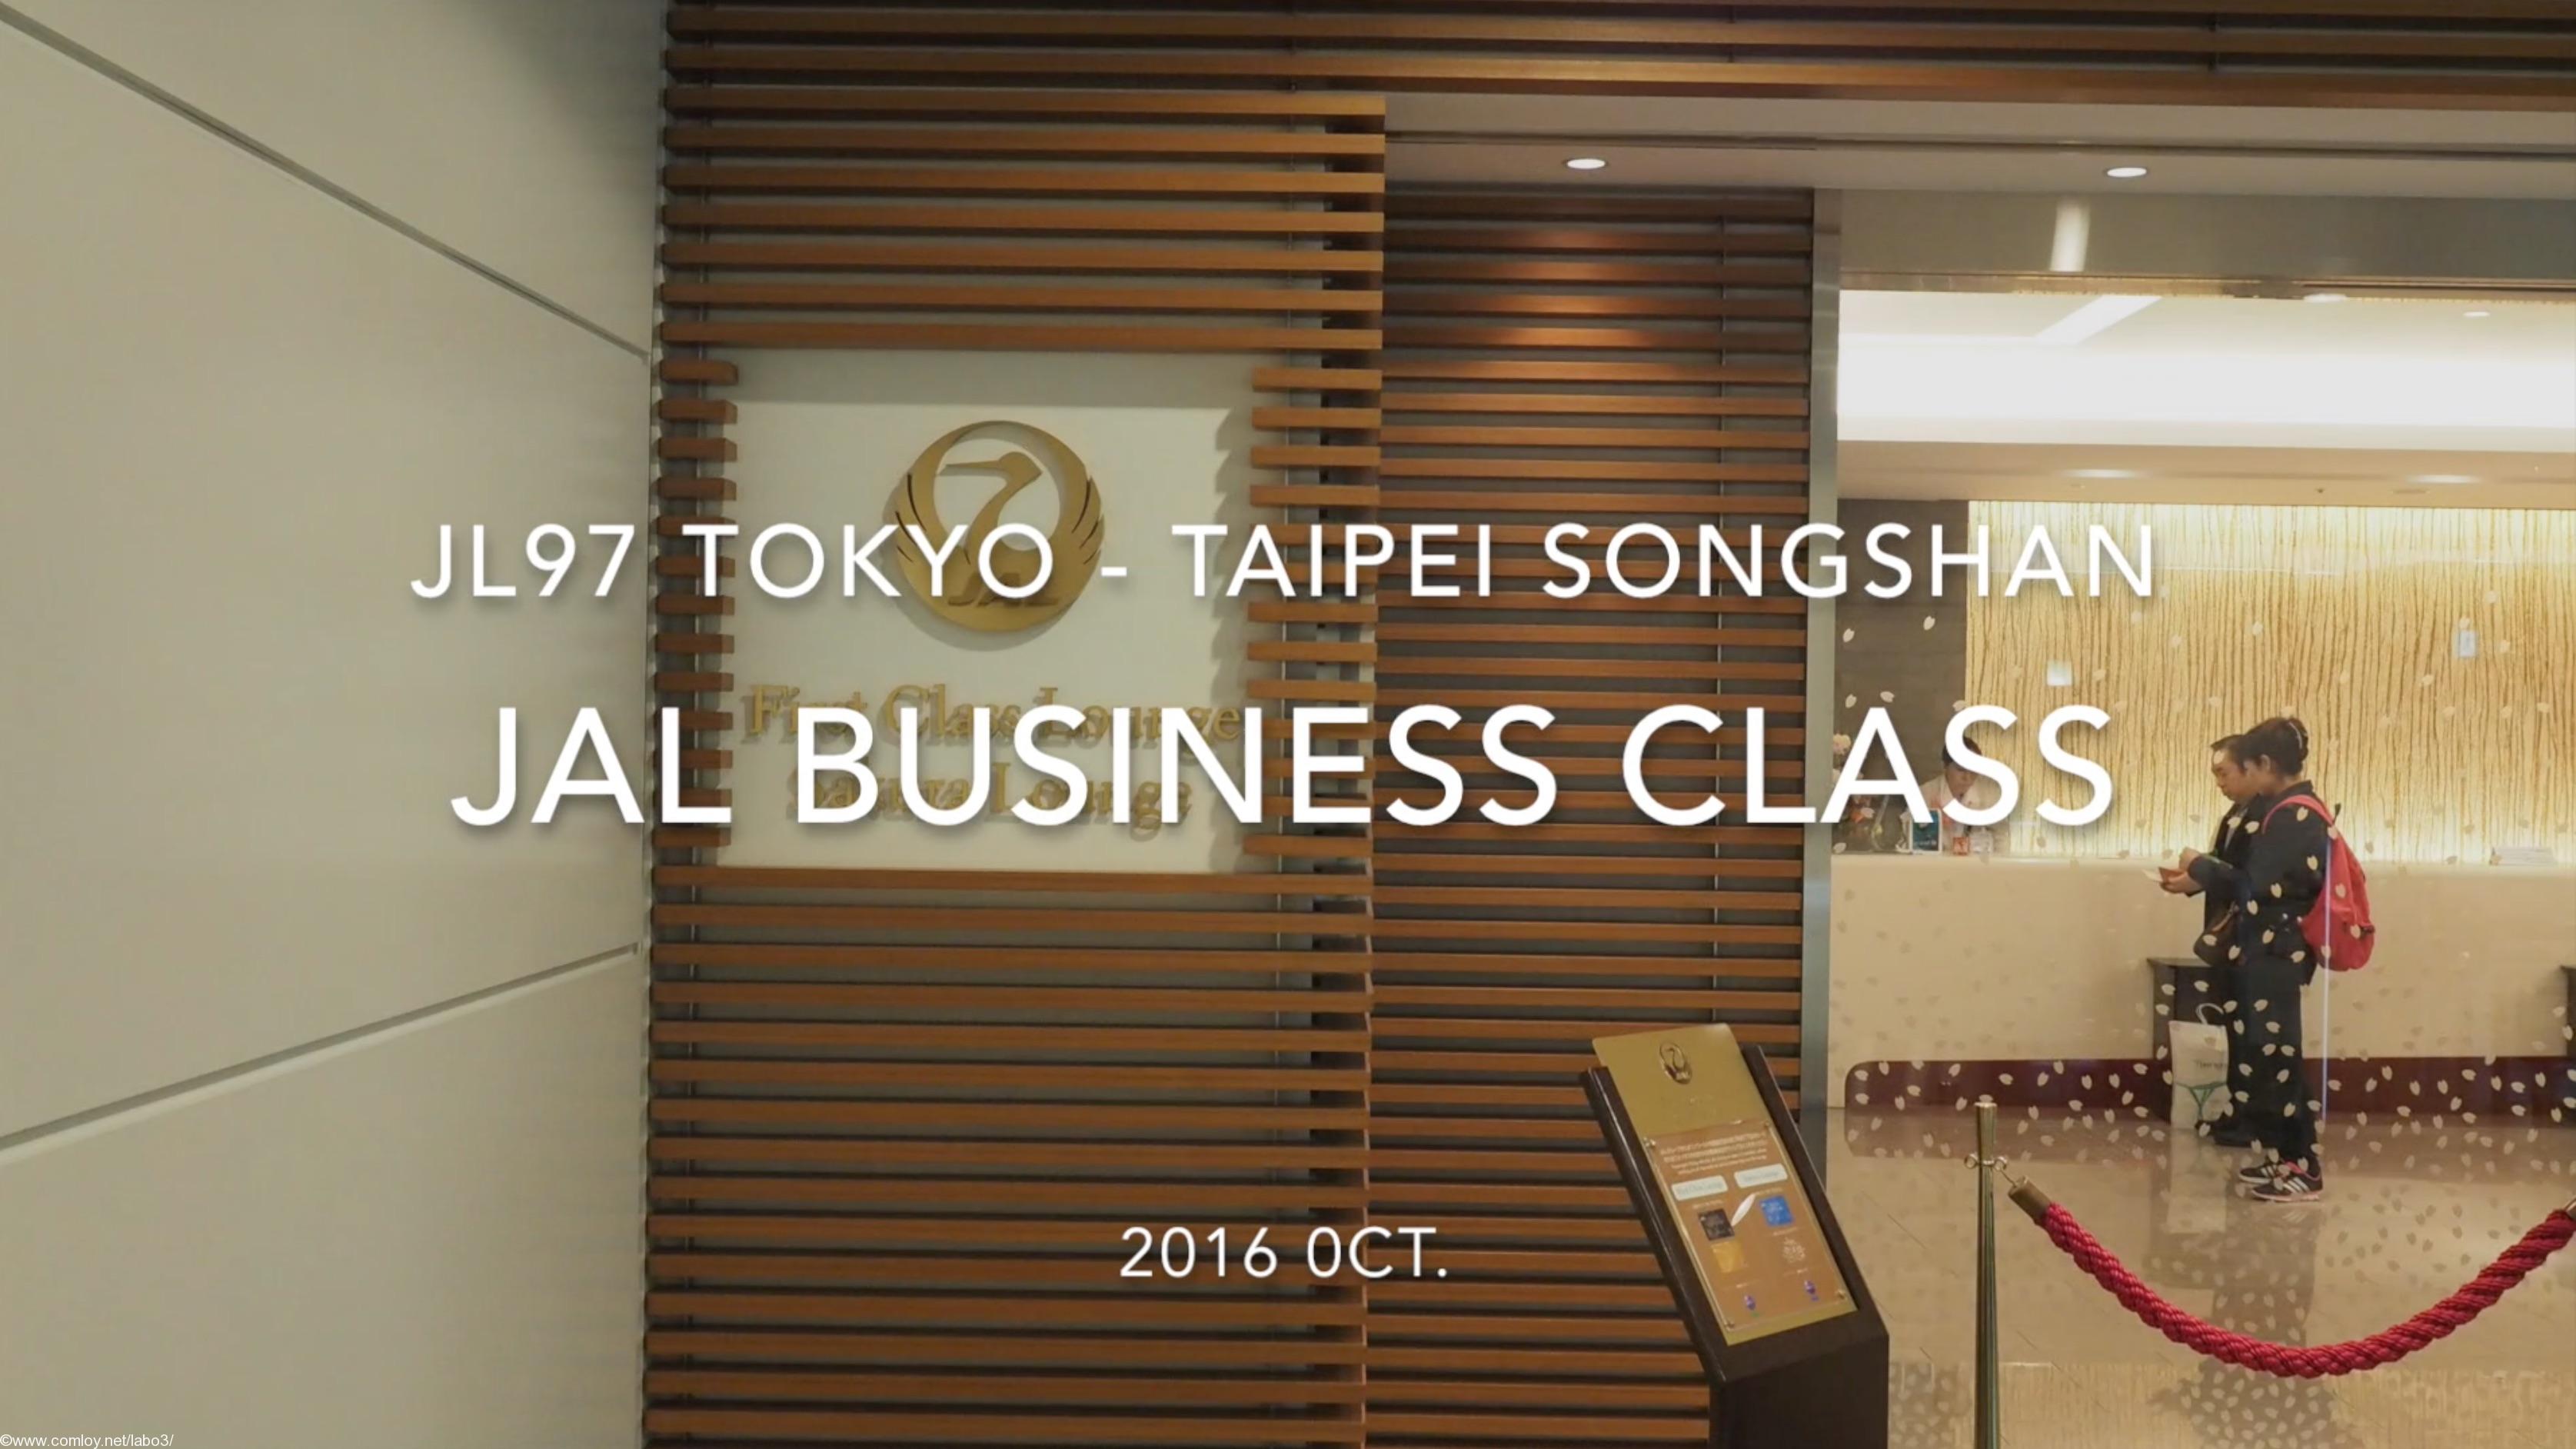 【Flight Report】JAL Business Class JL97 TOKYO HANEDA - TAIPEI Songshan 2016・10 日本航空 ビジネスクラス 搭乗記